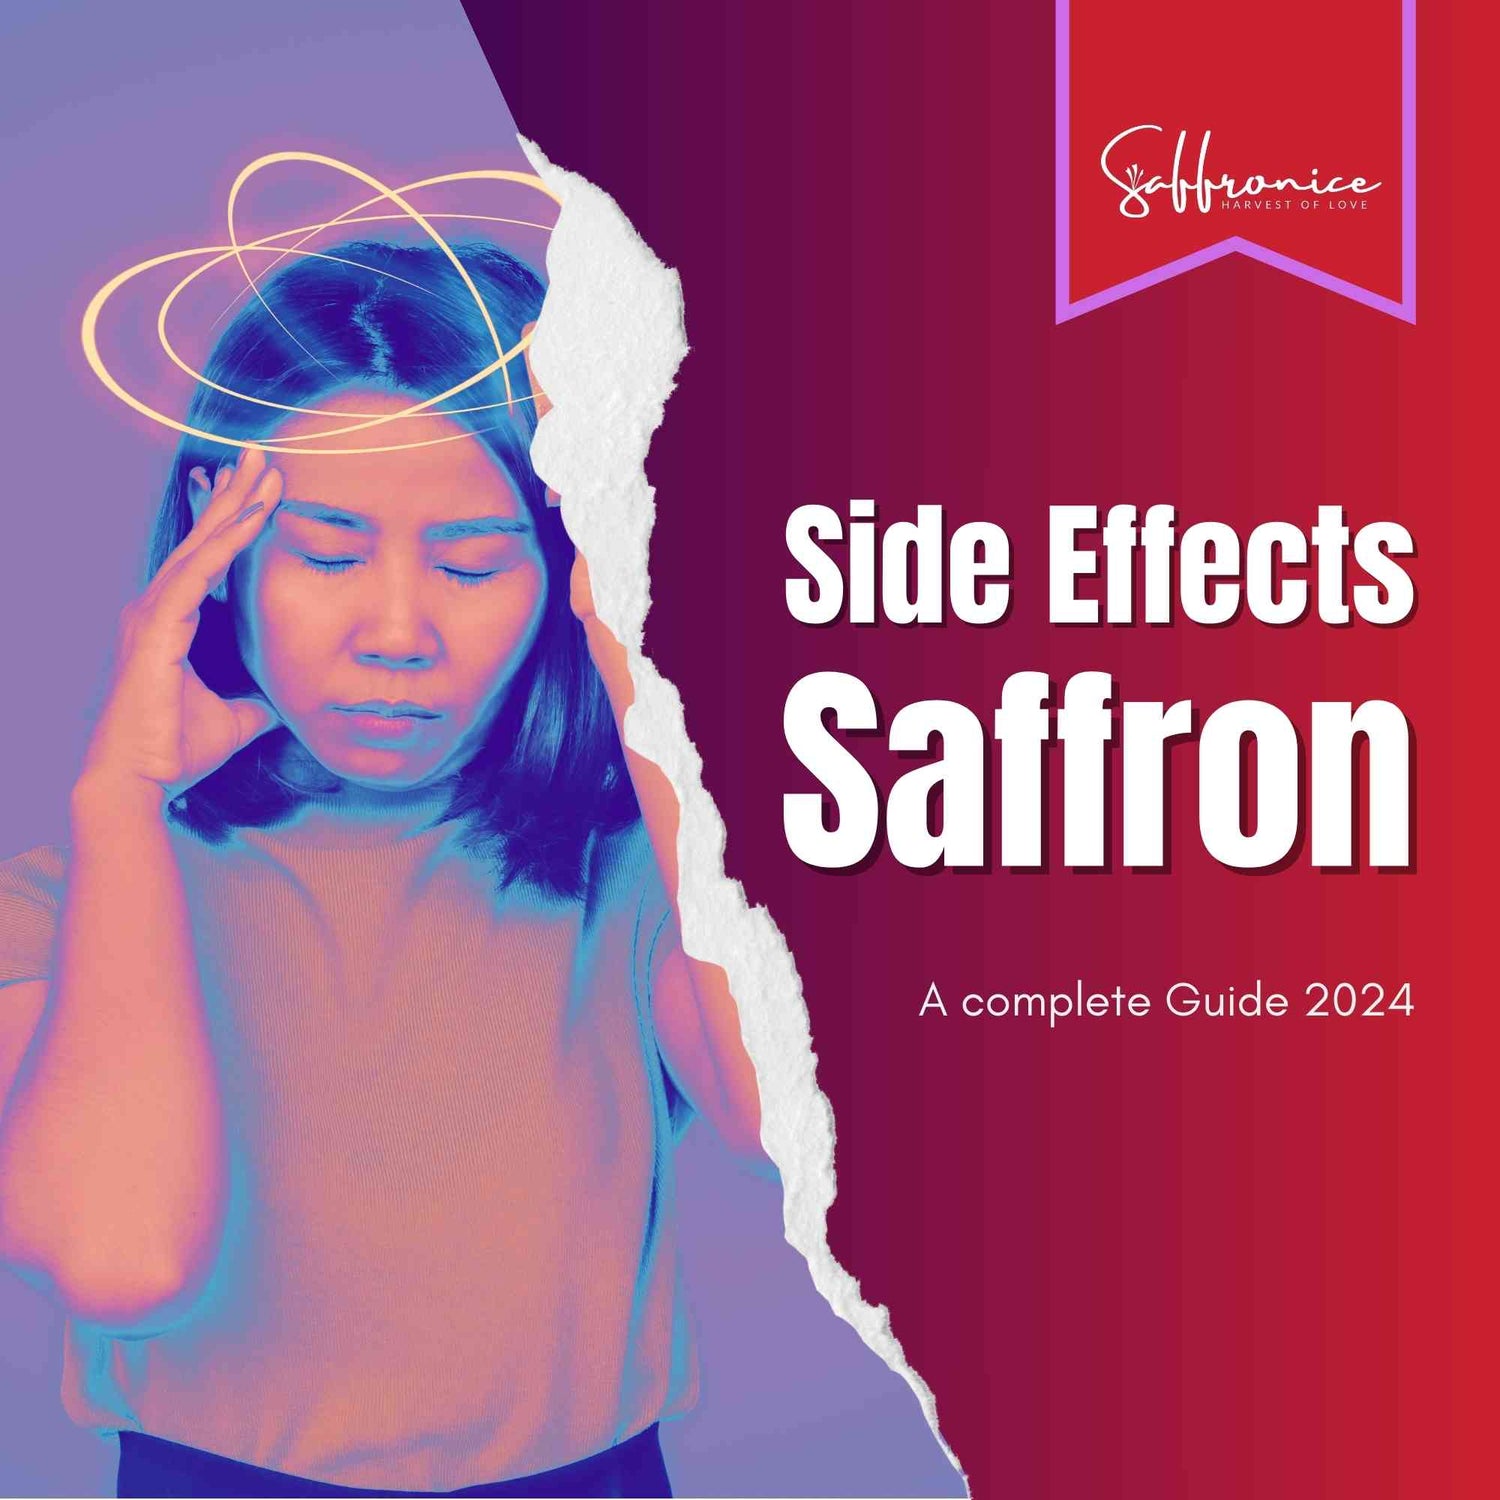 Side effects of saffron usage